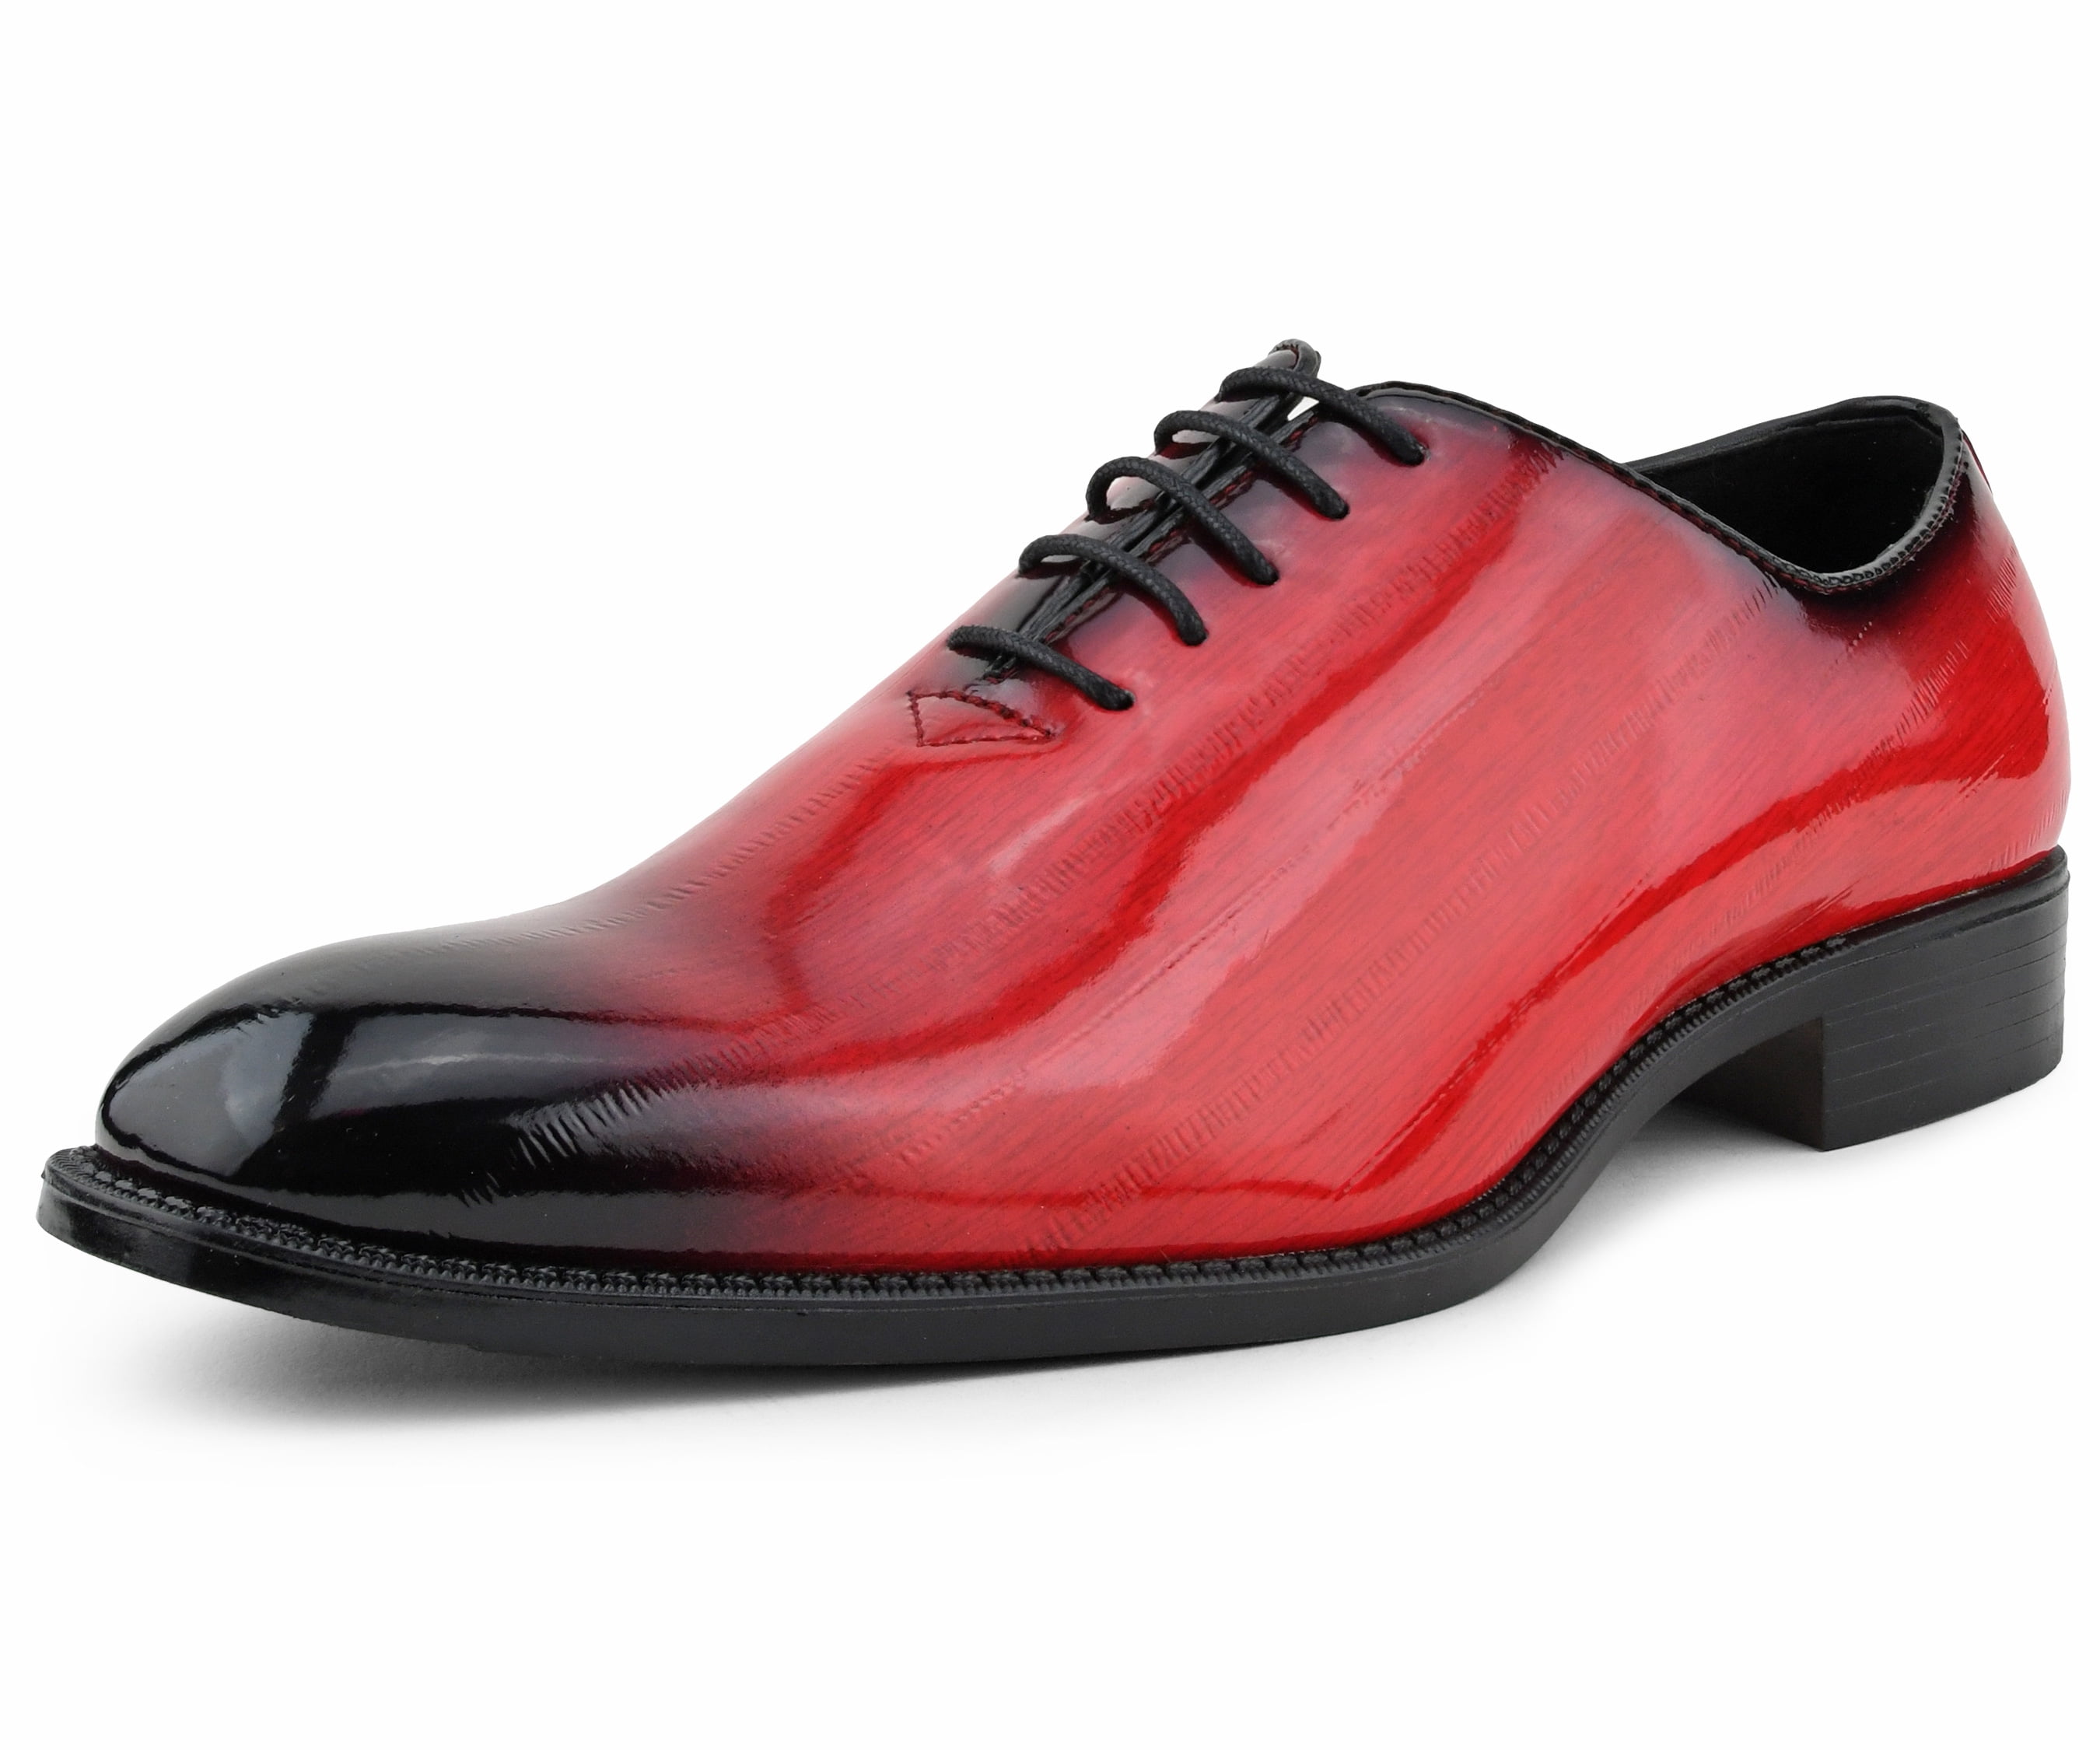 Details about   Men New Lace Up Leather Low Heel Shoes Formal Dress Oxfords  Brogue Pumps Shoes 